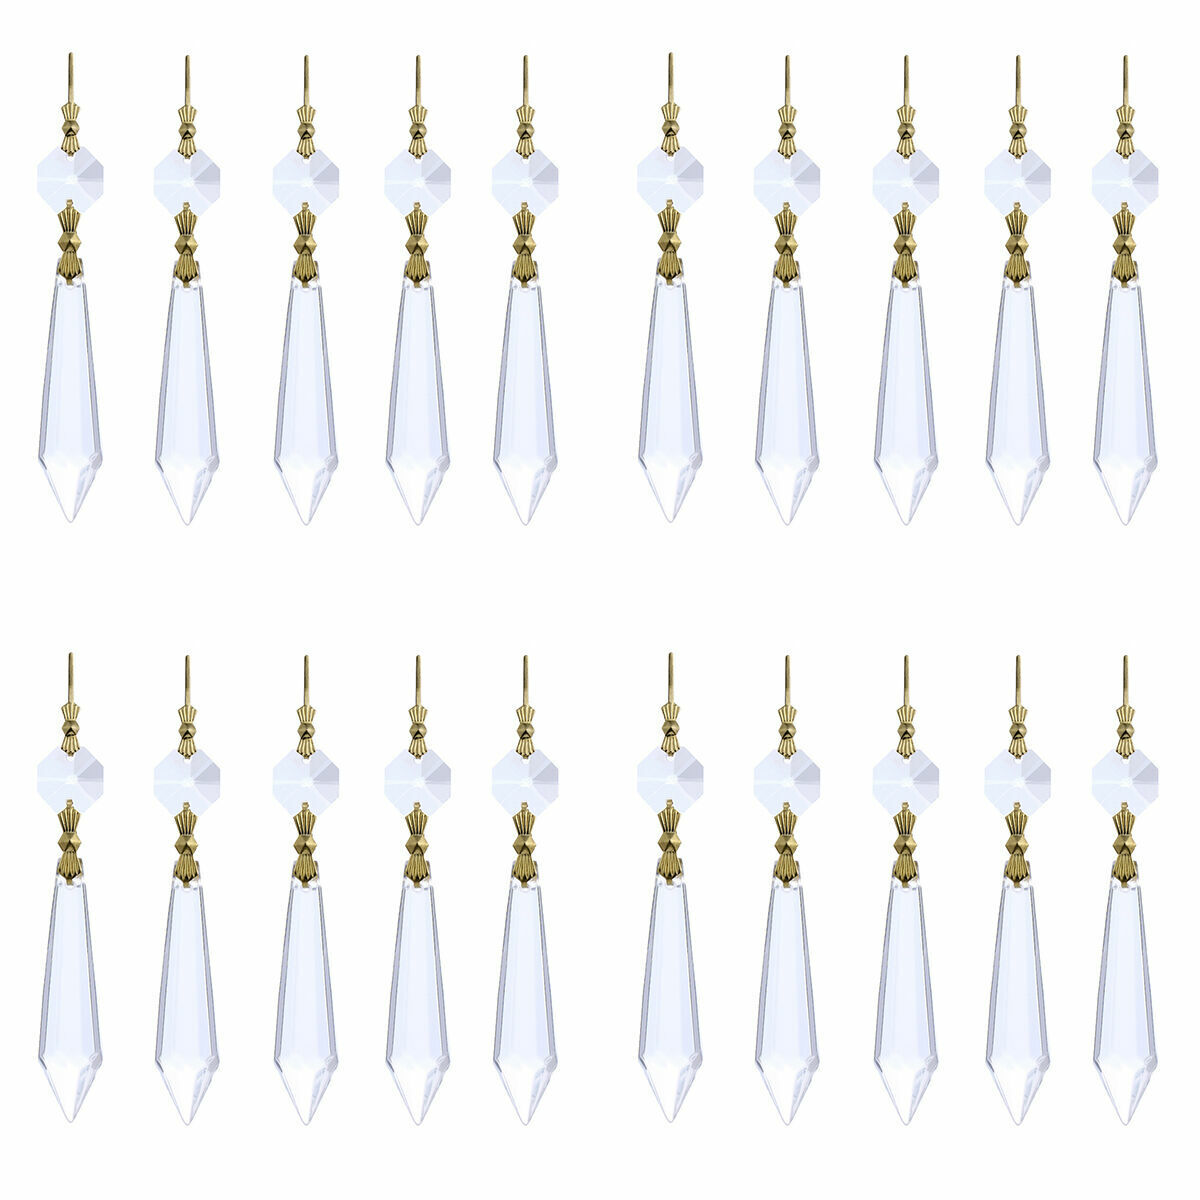 20X Gold Hook Hanging Drop Pendant Chandelier Clear Crystal Lamp Prism Part 38mm